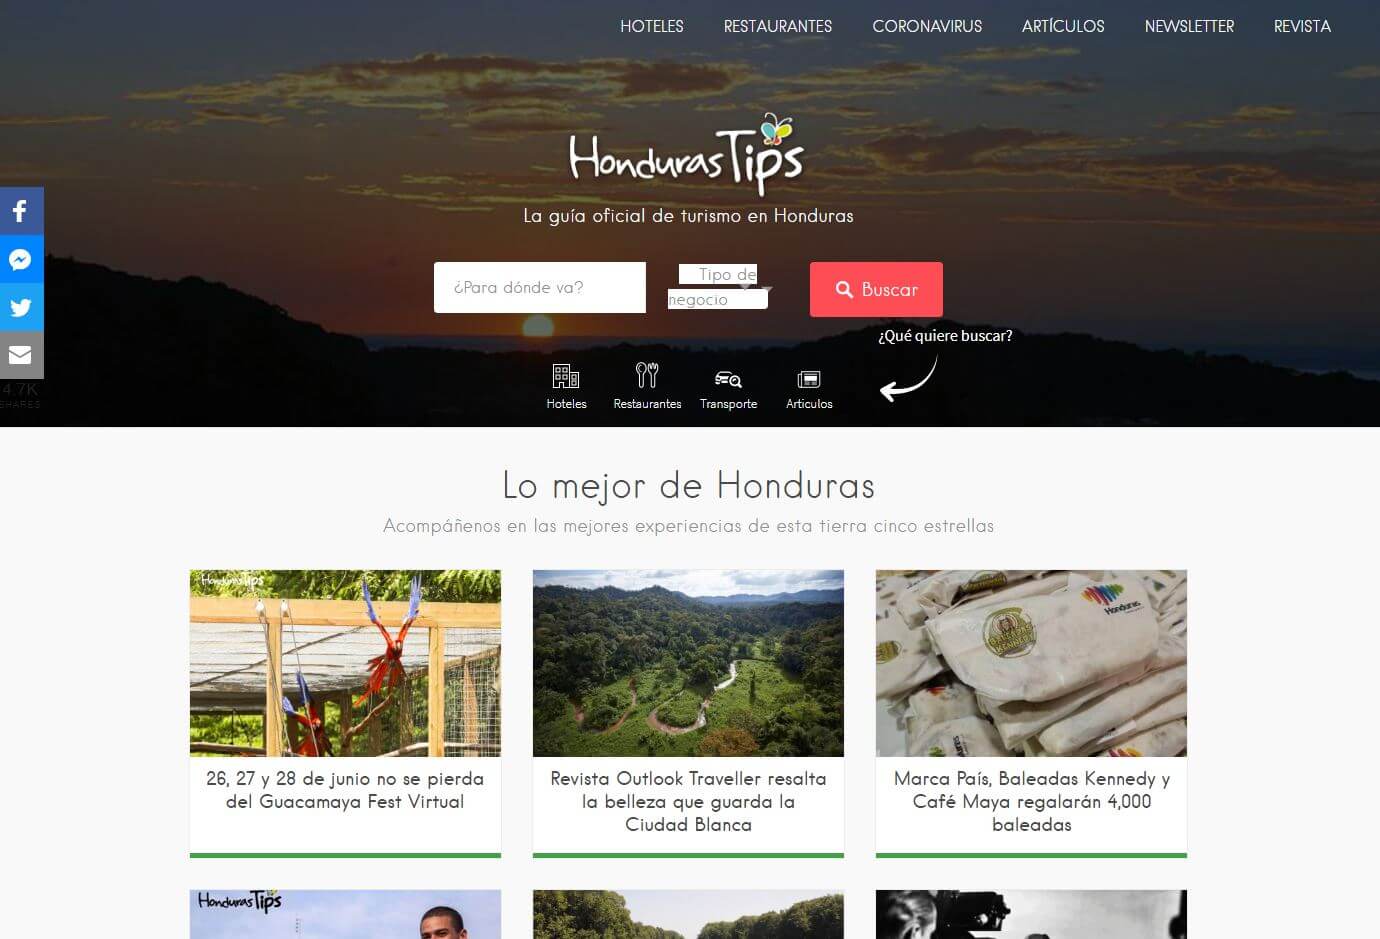 periodicos de honduras 11 honduras tips website